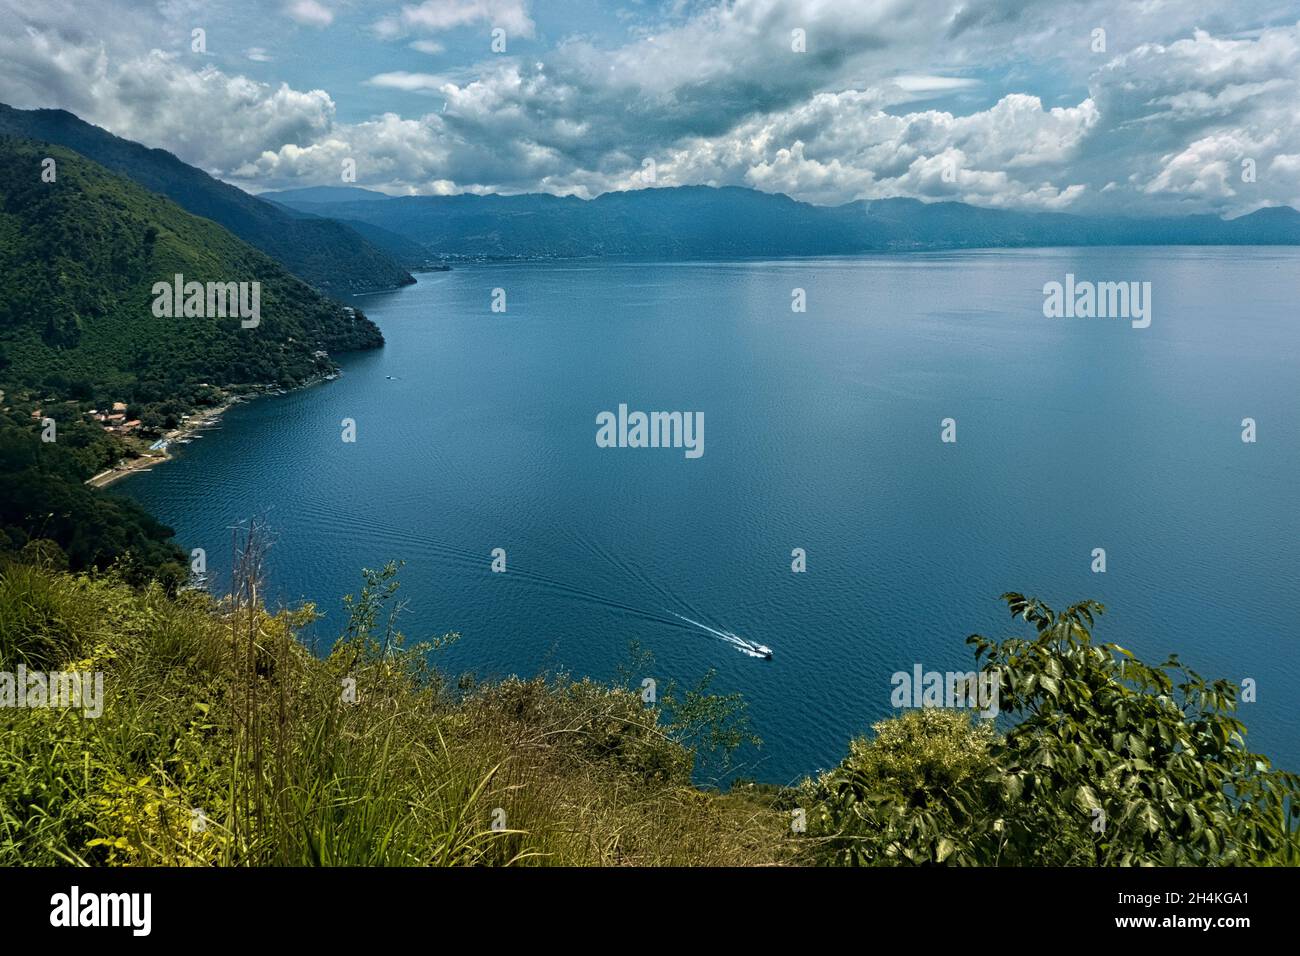 View of beautiful Lake Atitlan in the Guatemalan highlands, Solola, Guatemala. Stock Photo